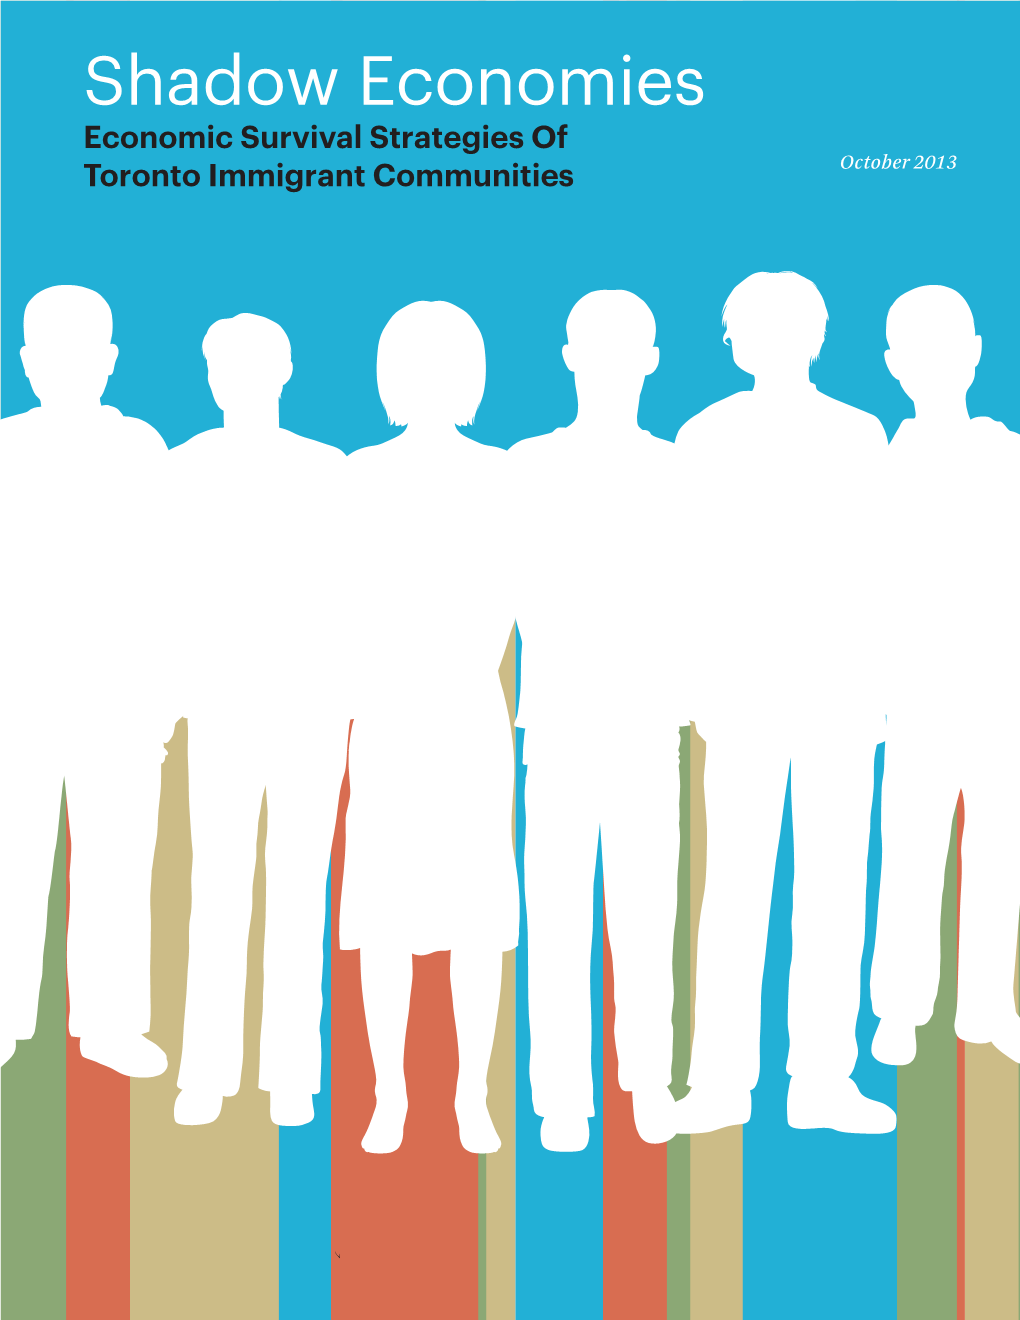 Shadow Economies: Economic Survival Strategies of Toronto